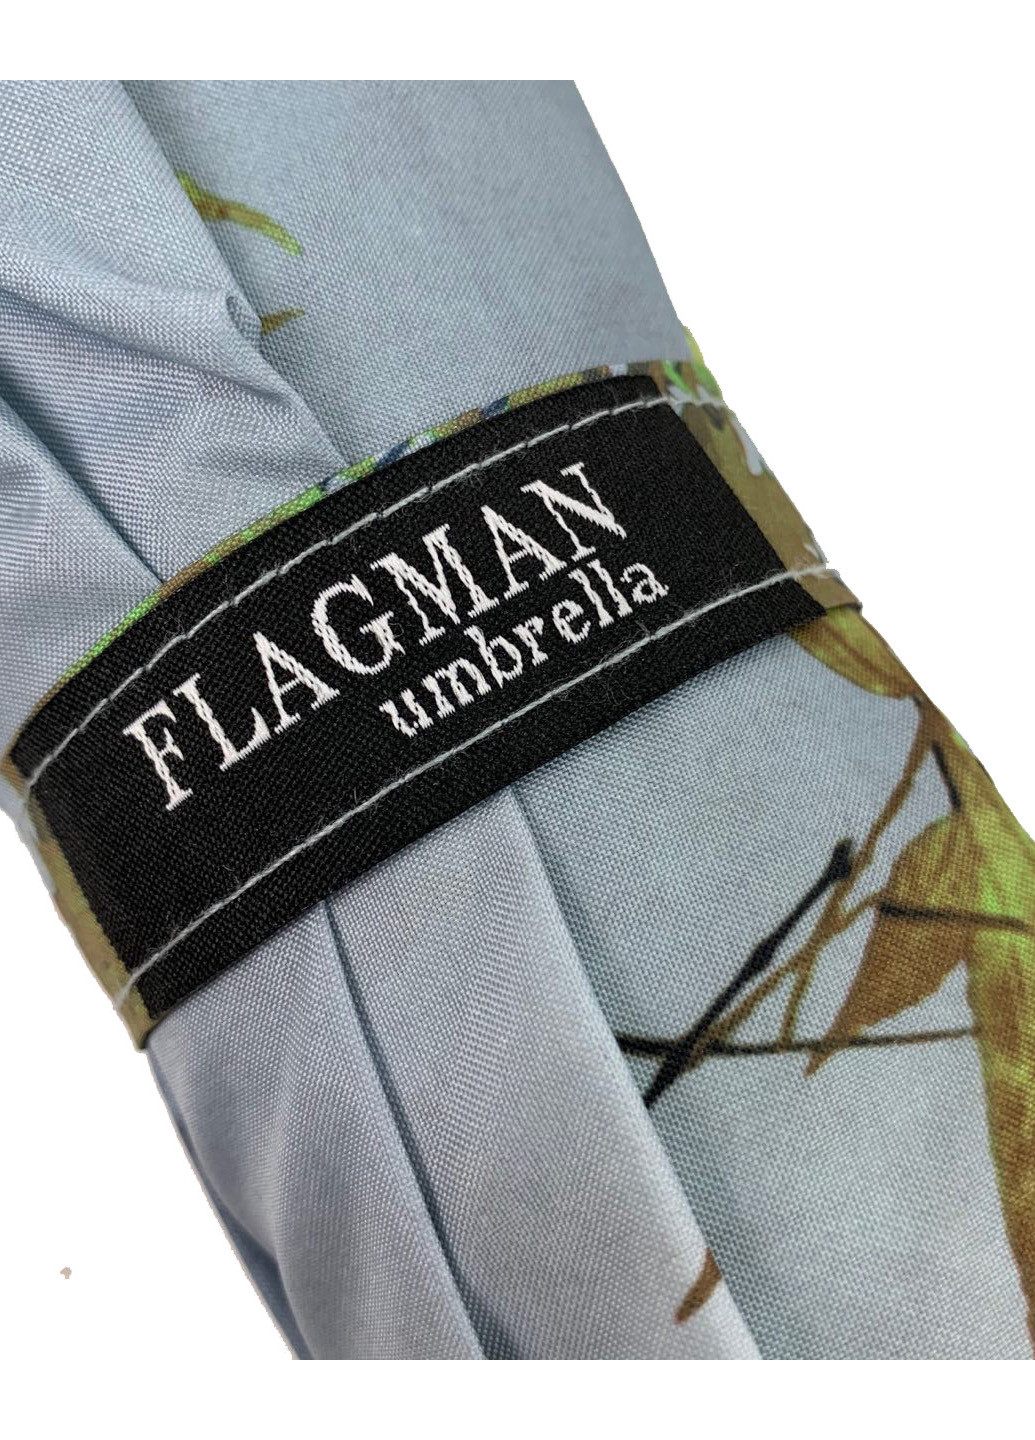 Женский зонт повний автомат (745) 98 см Flagman (189978914)